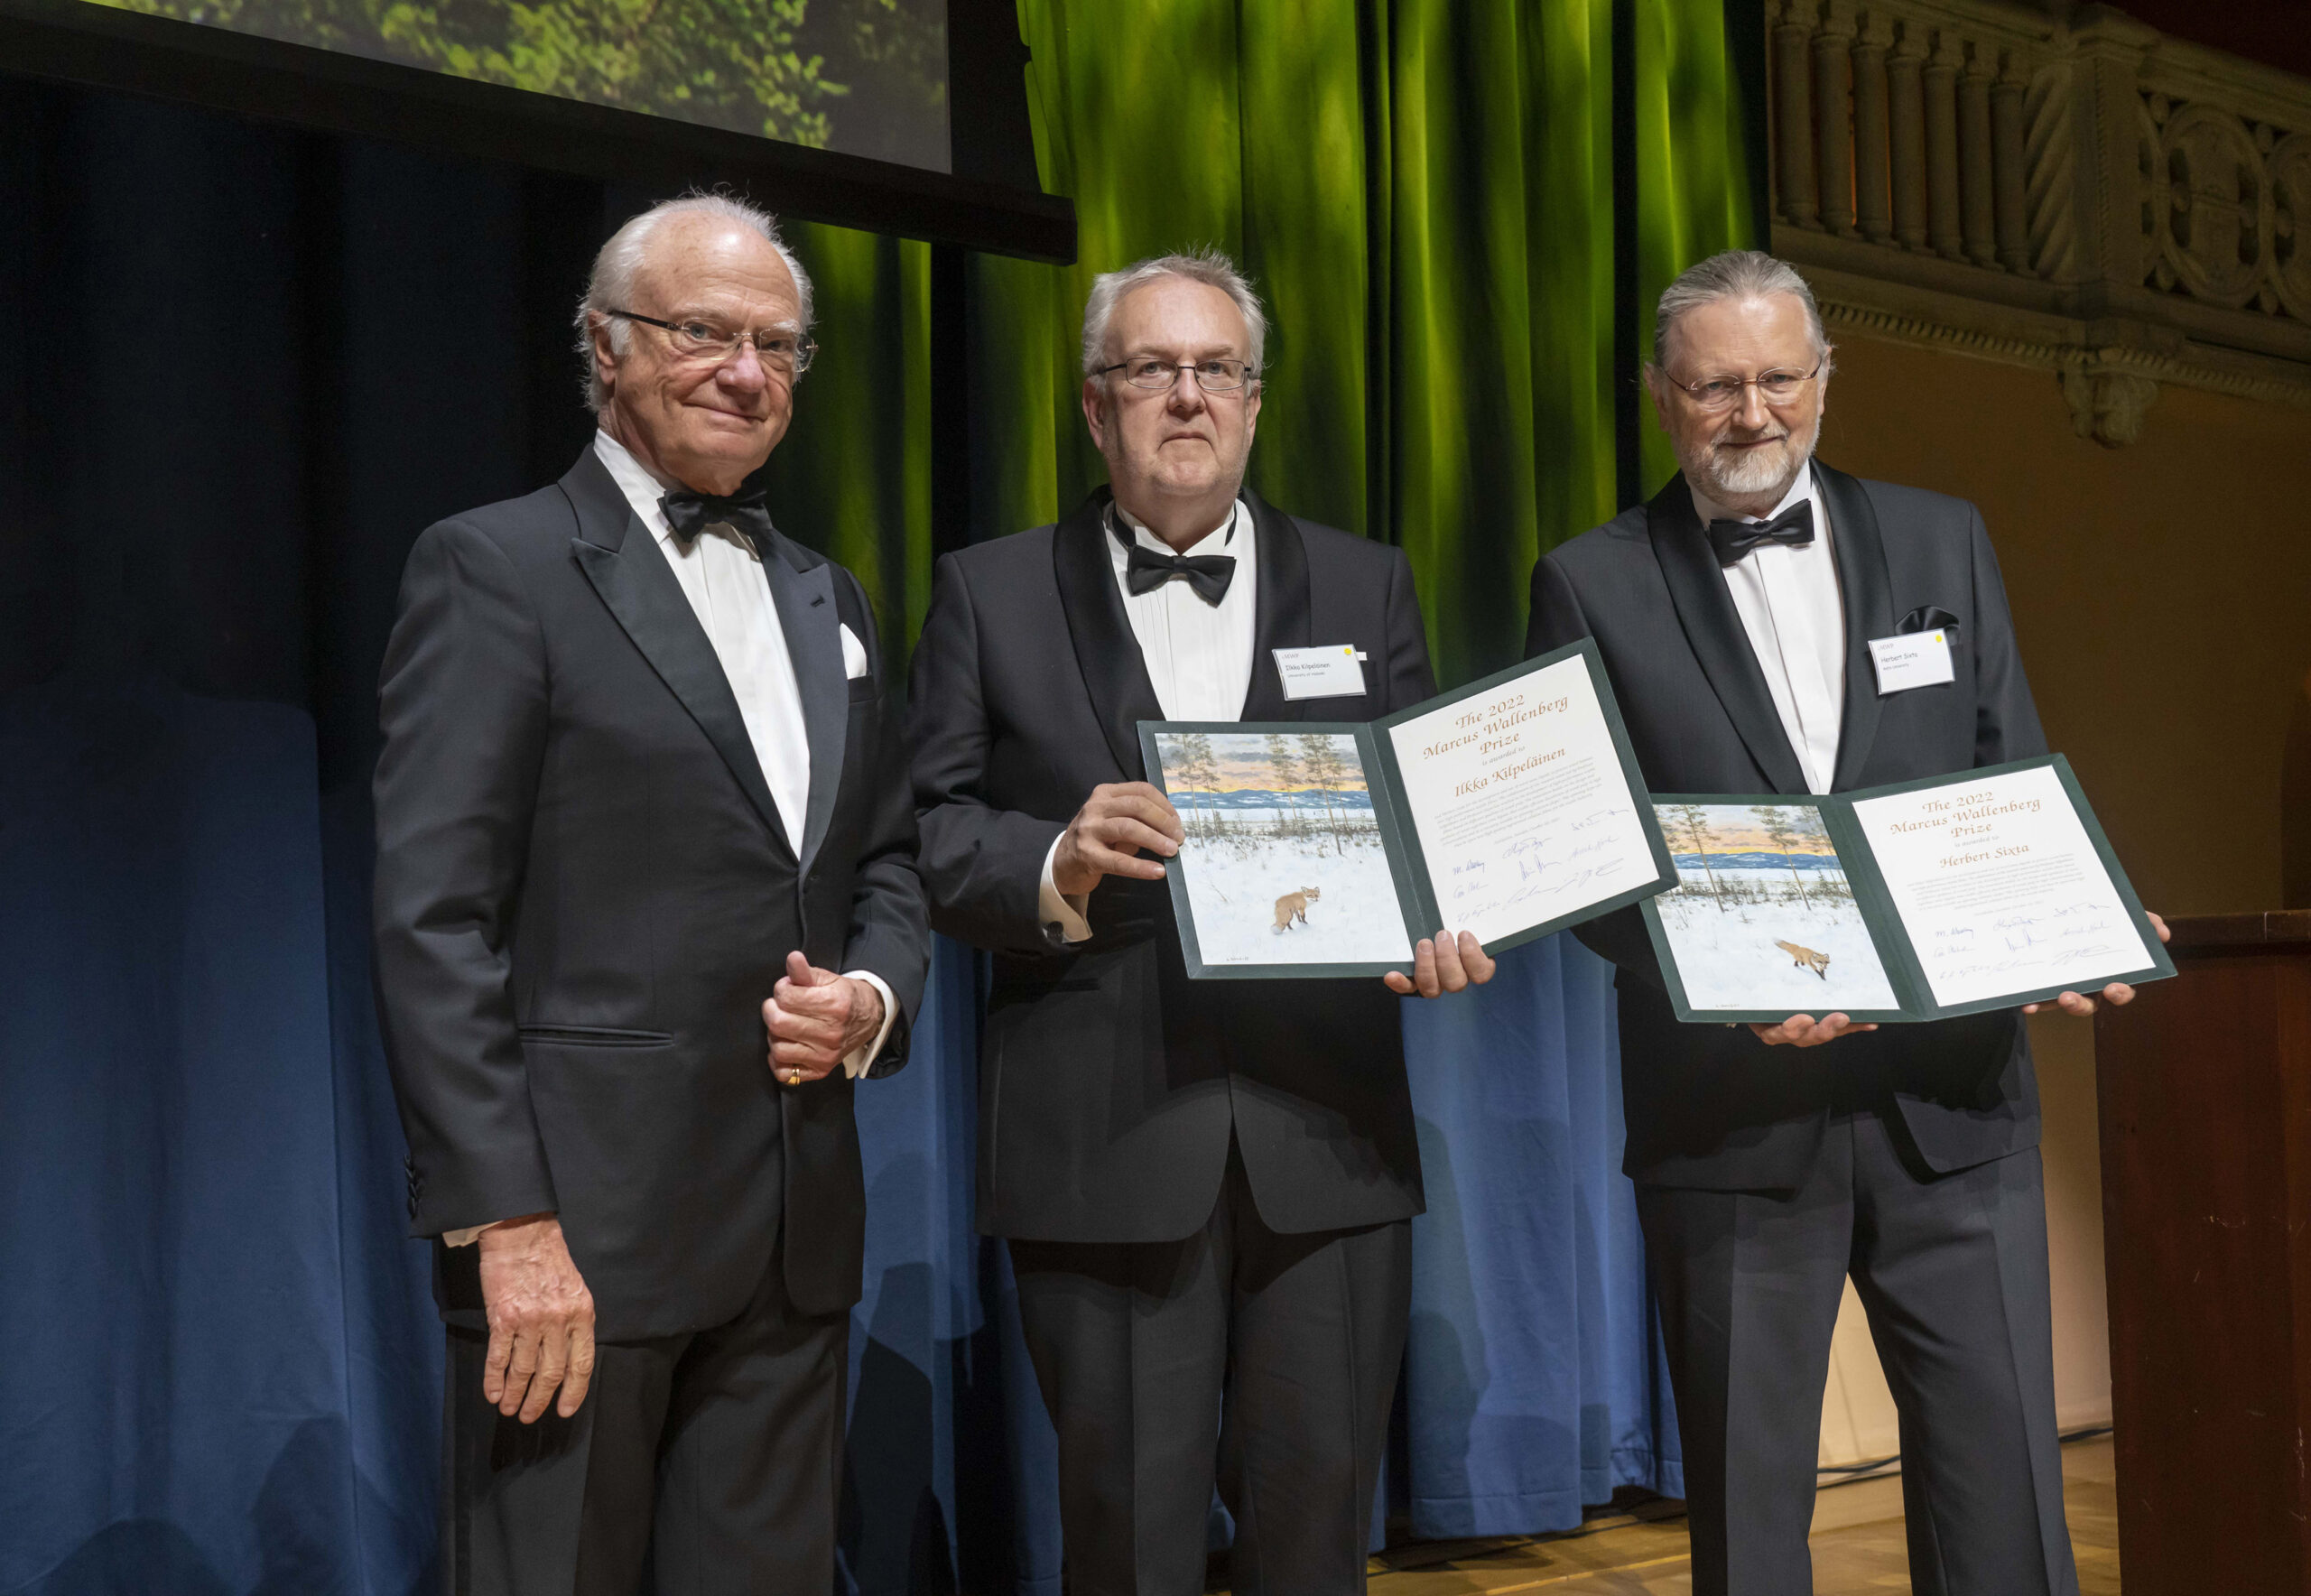 H.M. King Carl XVI Gustaf of Sweden awards the MWP 2022 to Prof. Ilkka Kilpeläinen and Prof. Herbert Sixta.